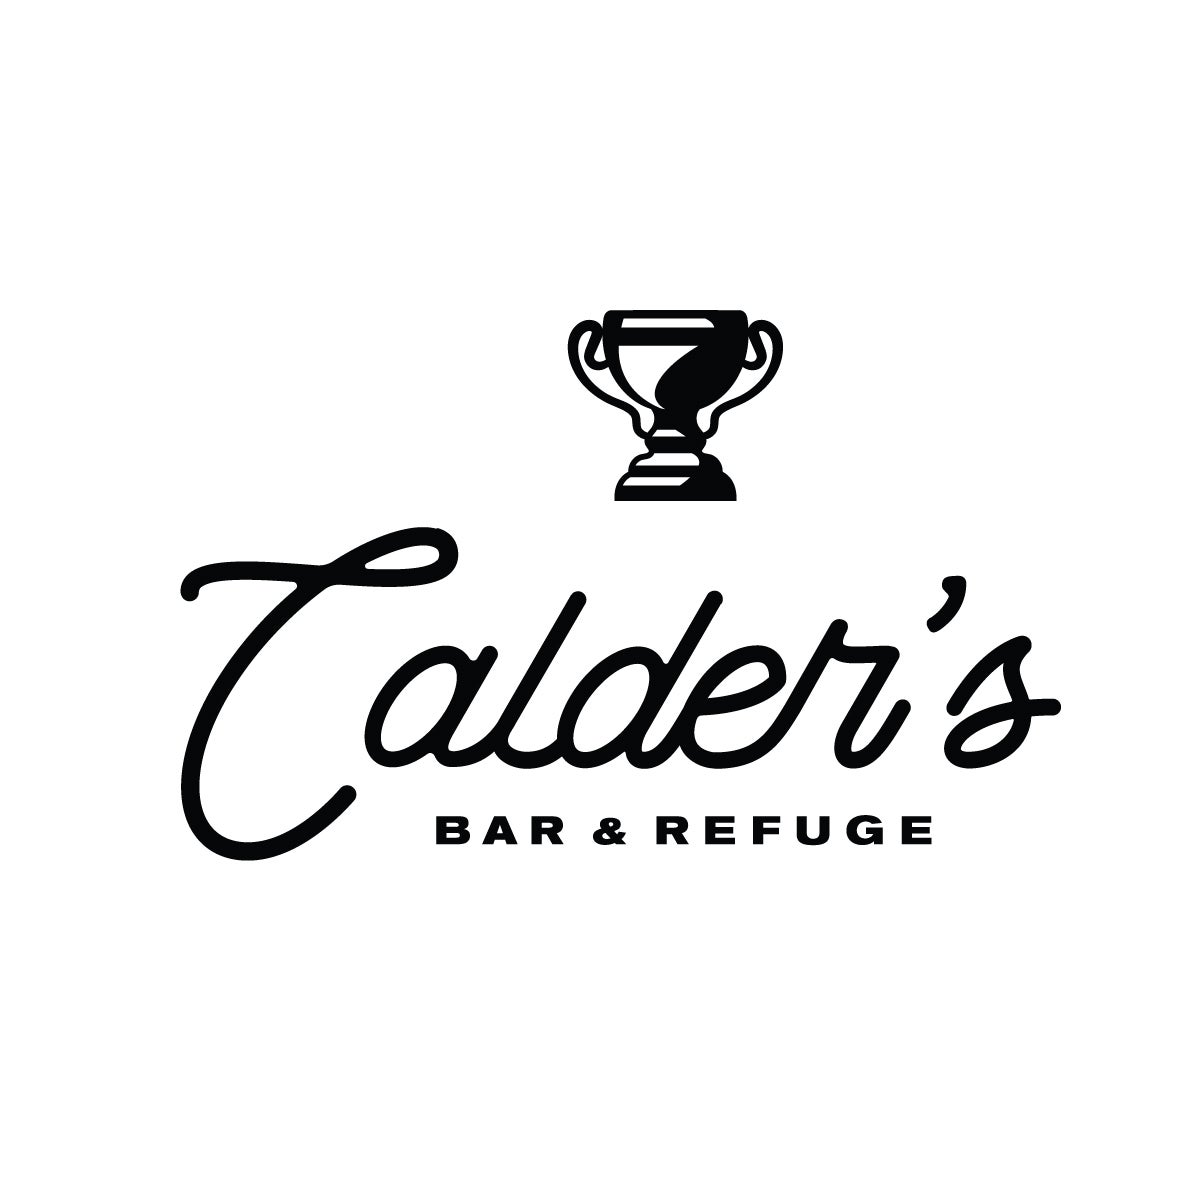 Calders_logo-01.jpg